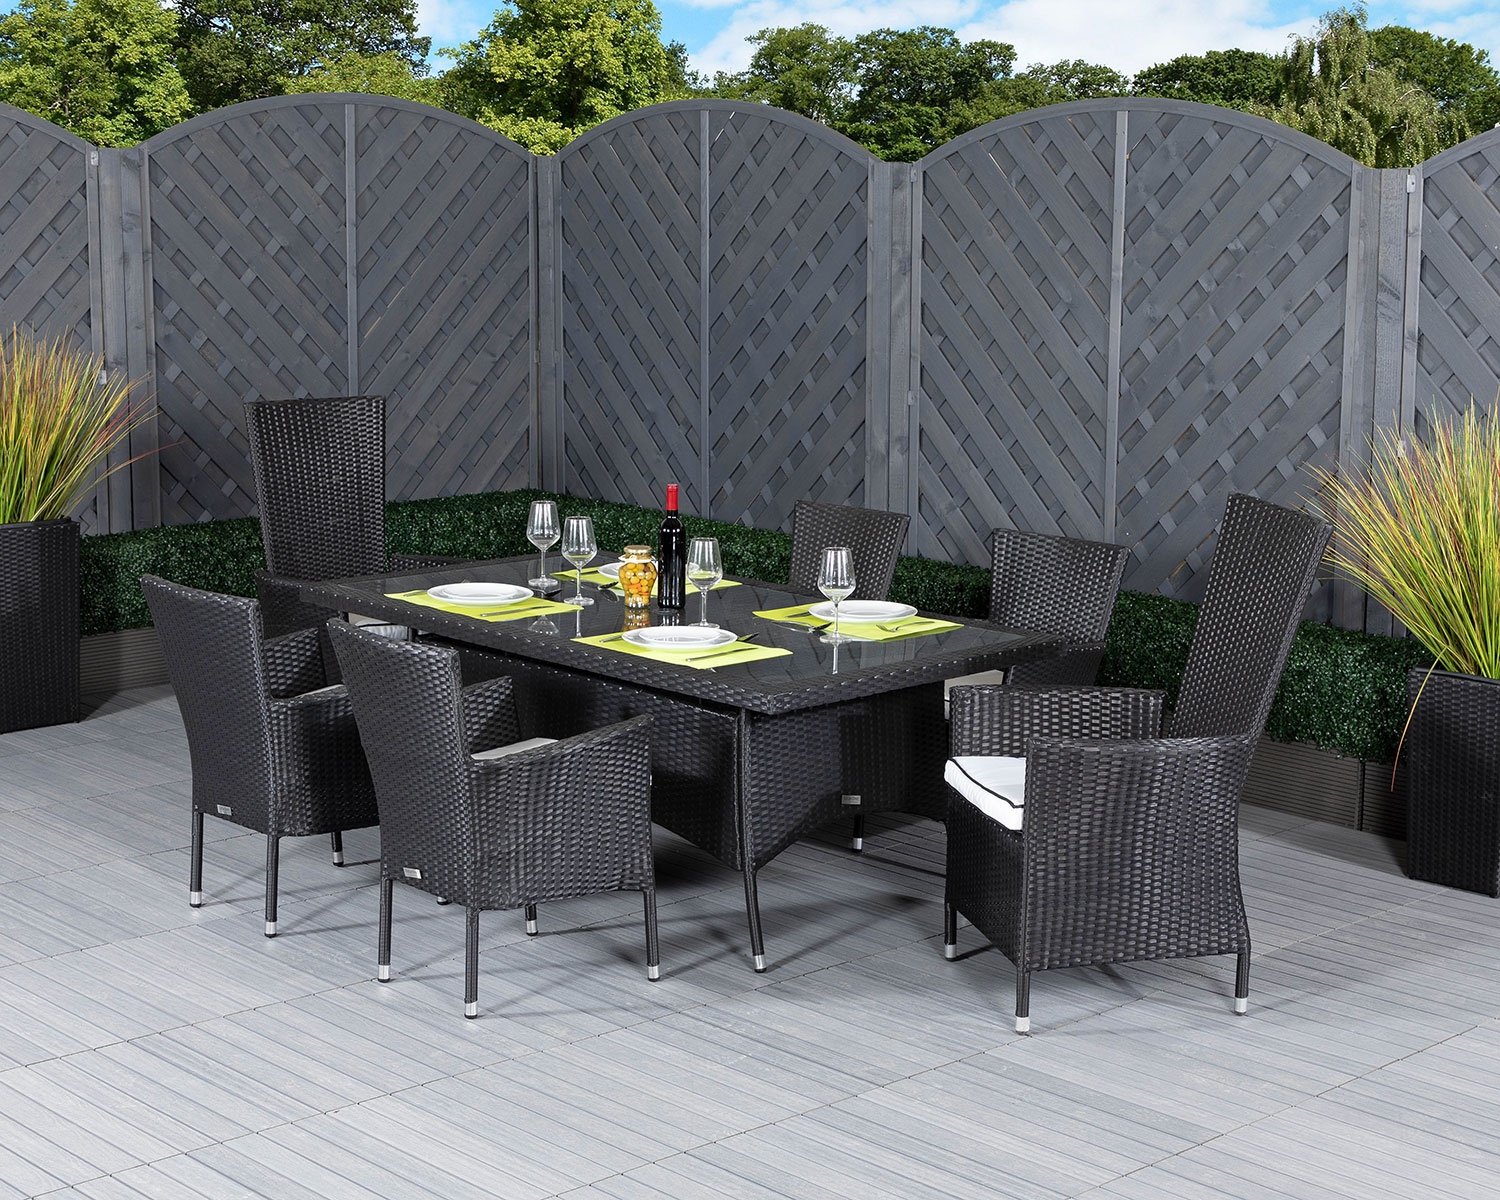 Set cam 065 - rattan garden furniture | patio furniture |conservatory furniture